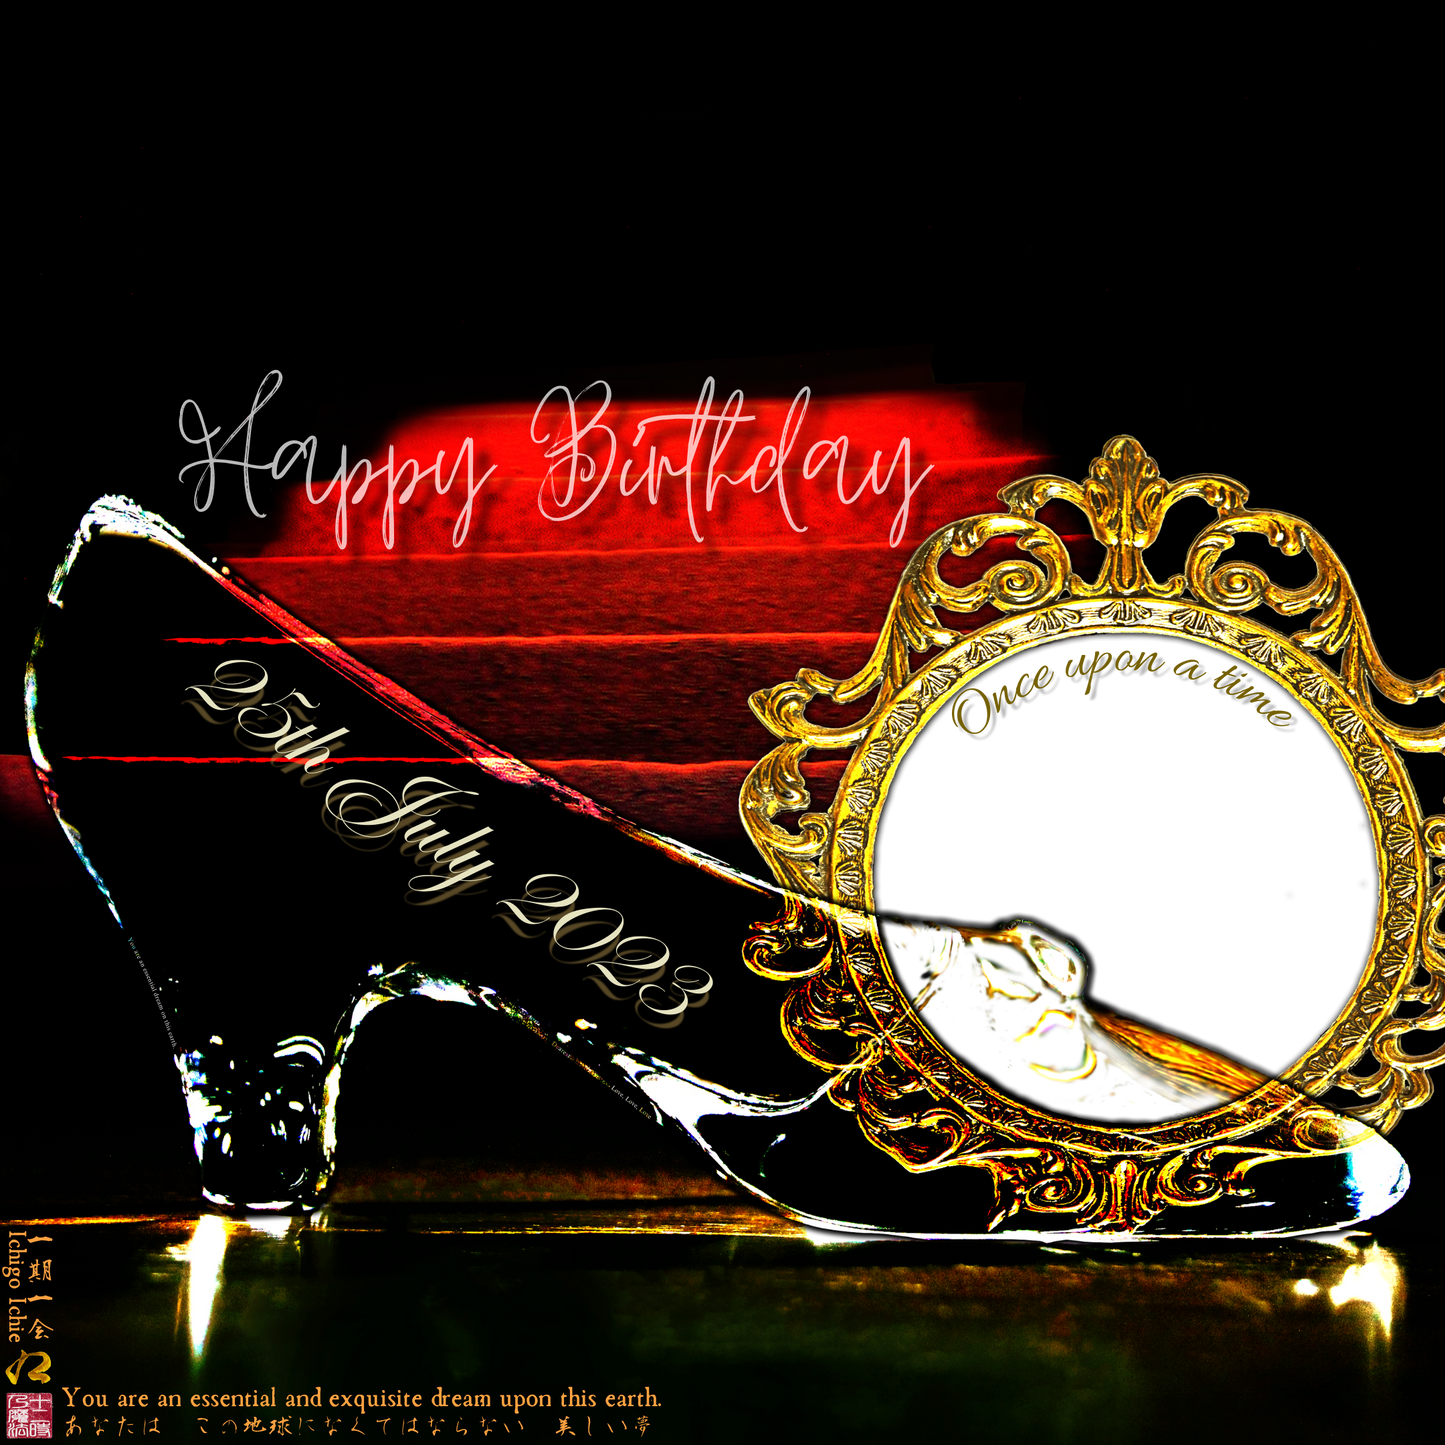 Happy Birthday Glass Slipper "Ichigo Ichie" 25th July 2023 the Right (1-of-1) NFT Art